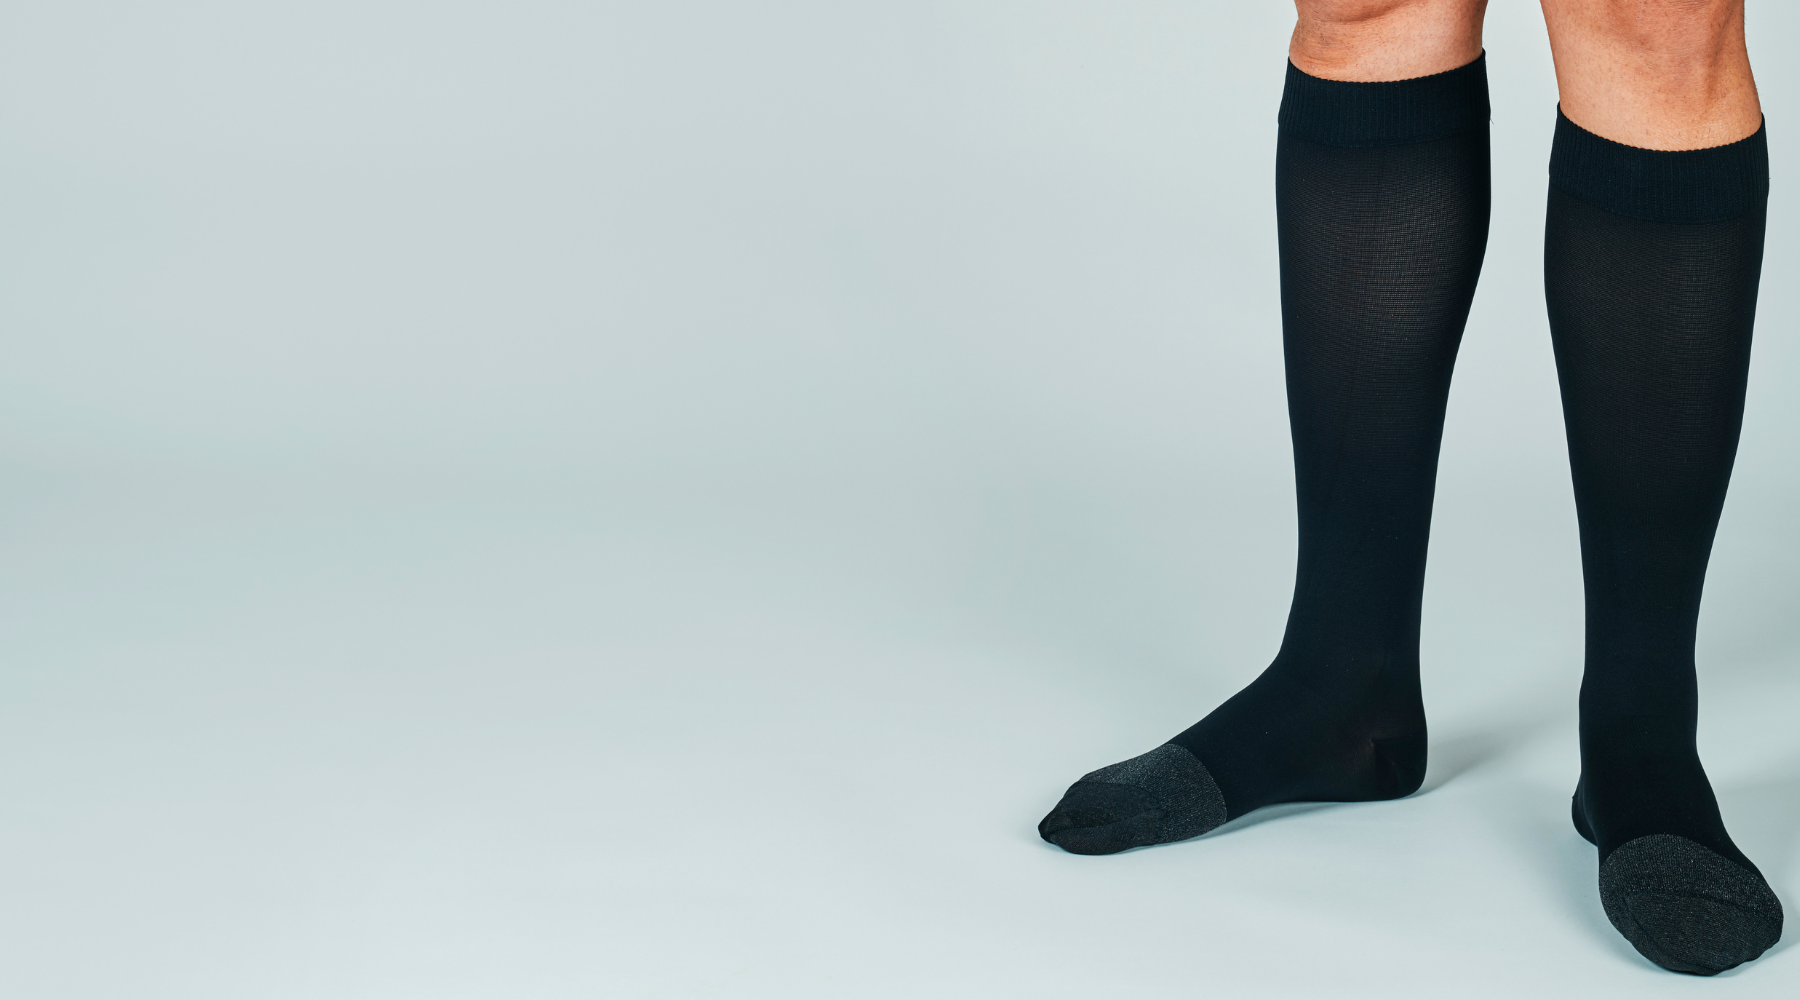 Over The Calf Diabetic Socks: Enhancing Comfort and Circulation